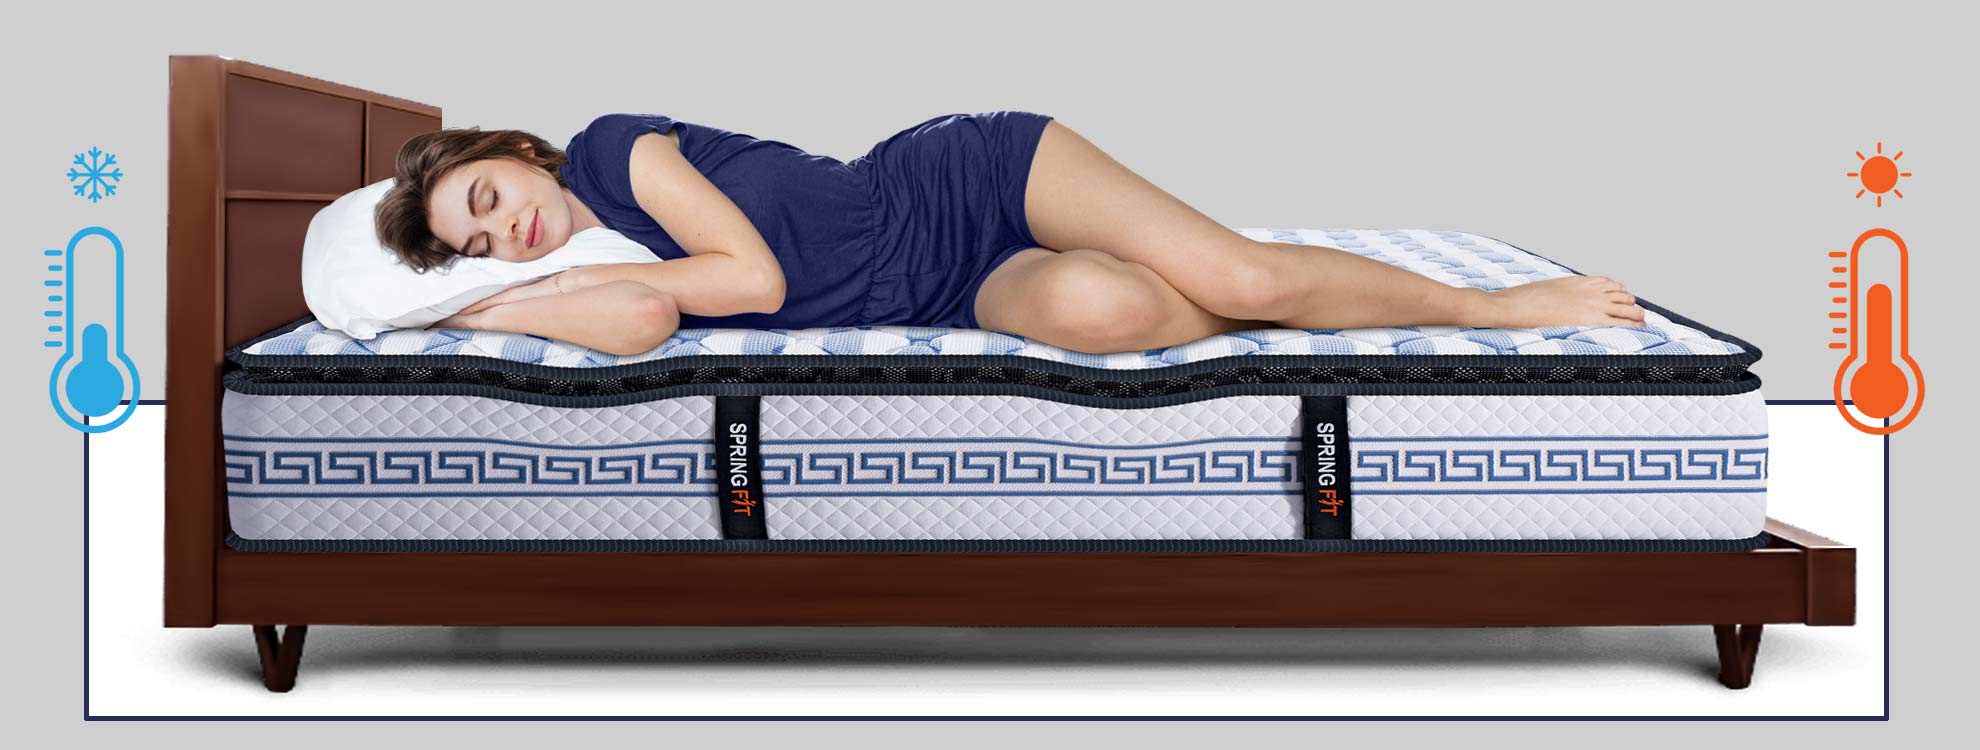 ensure temperature sensitivity for cosy sleep